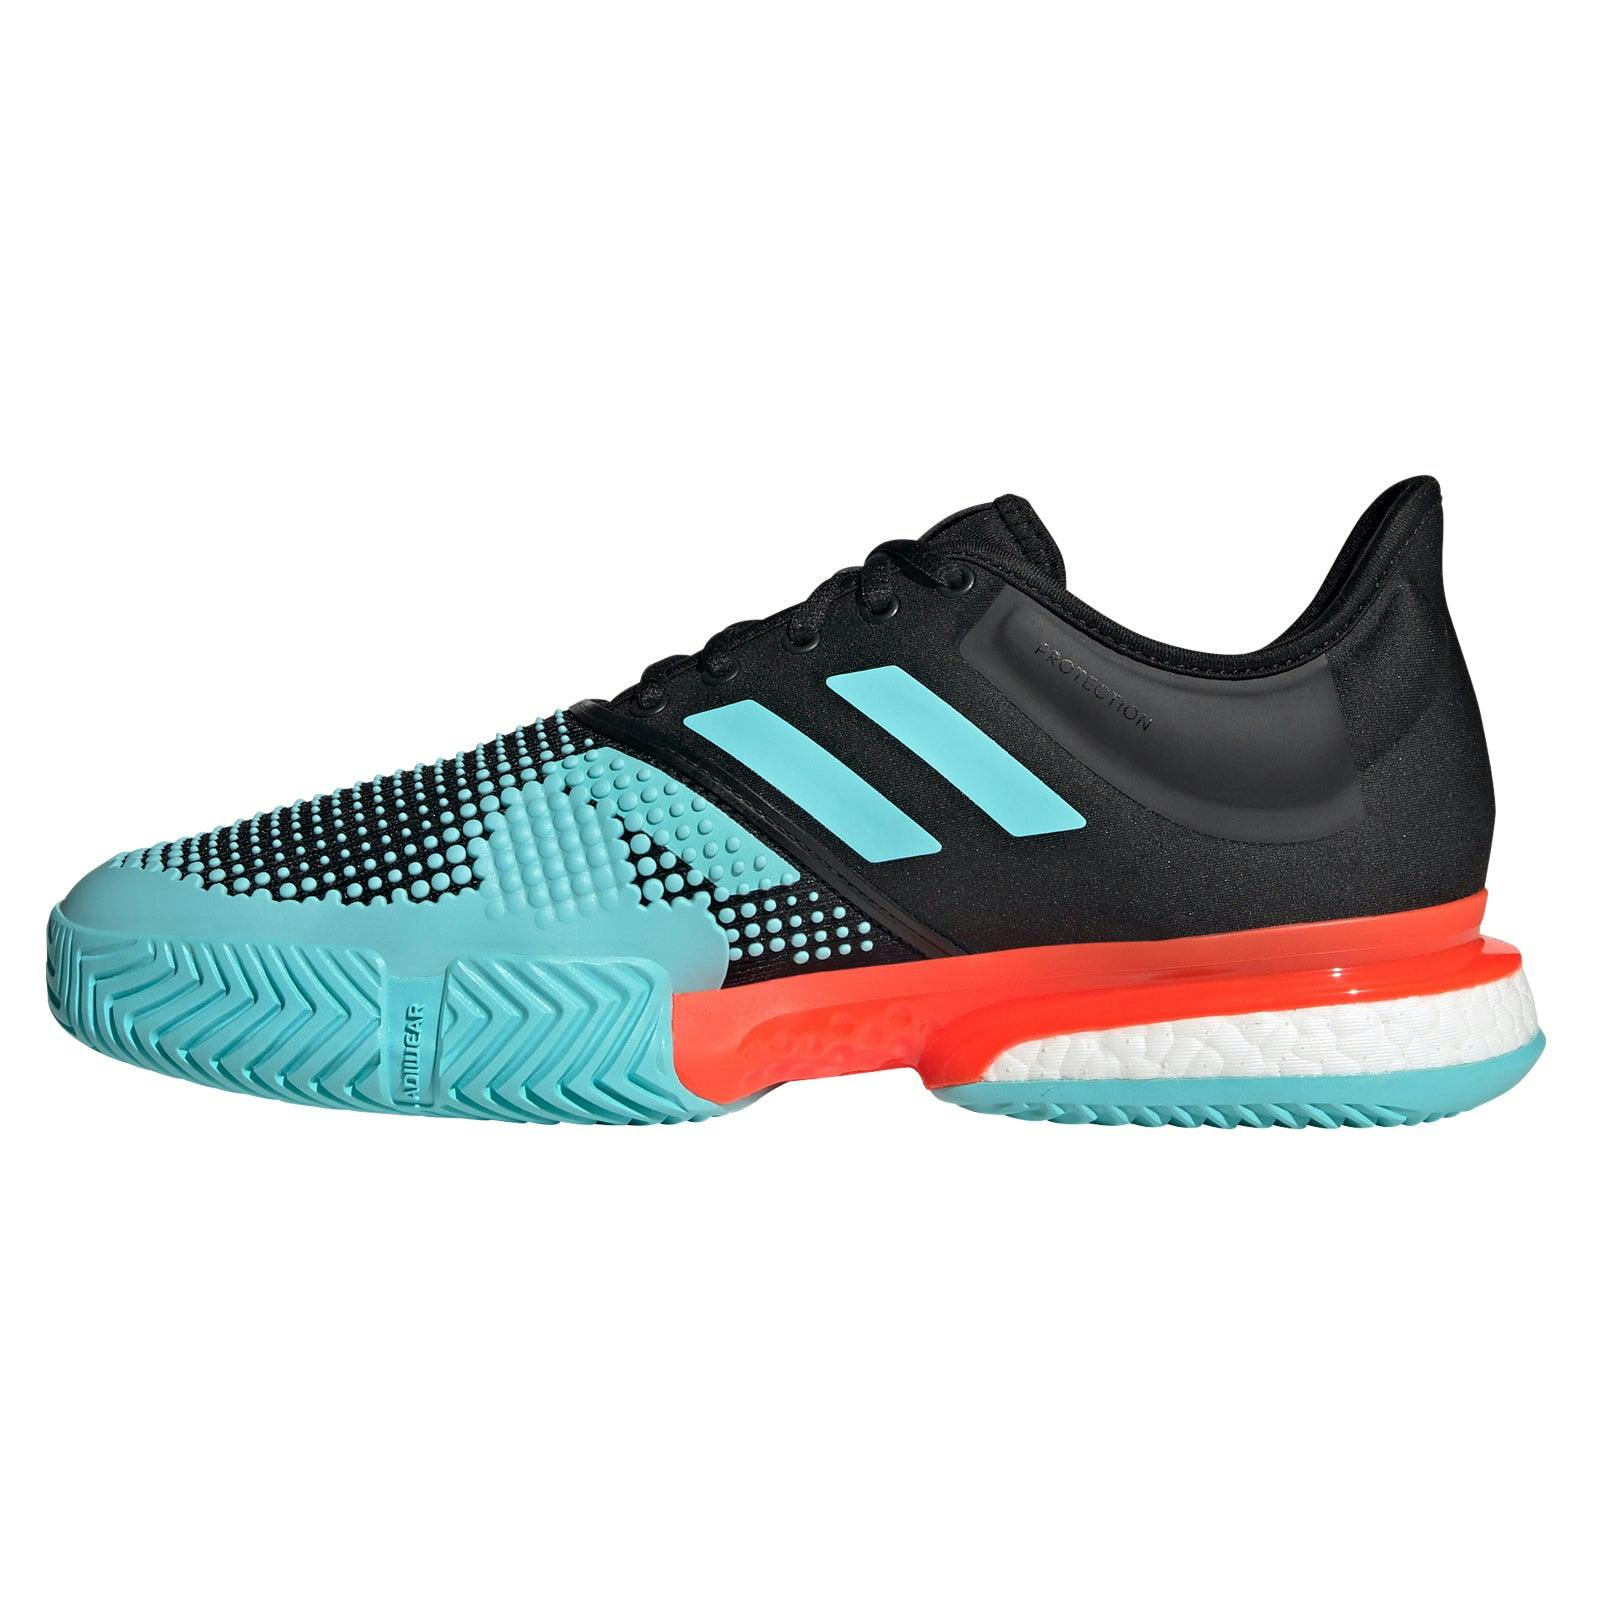 Adidas SoleCourt Primeblue Black Mens Tennis Shoes - BK/AQUA/RD 001 / D Medium / 9.5